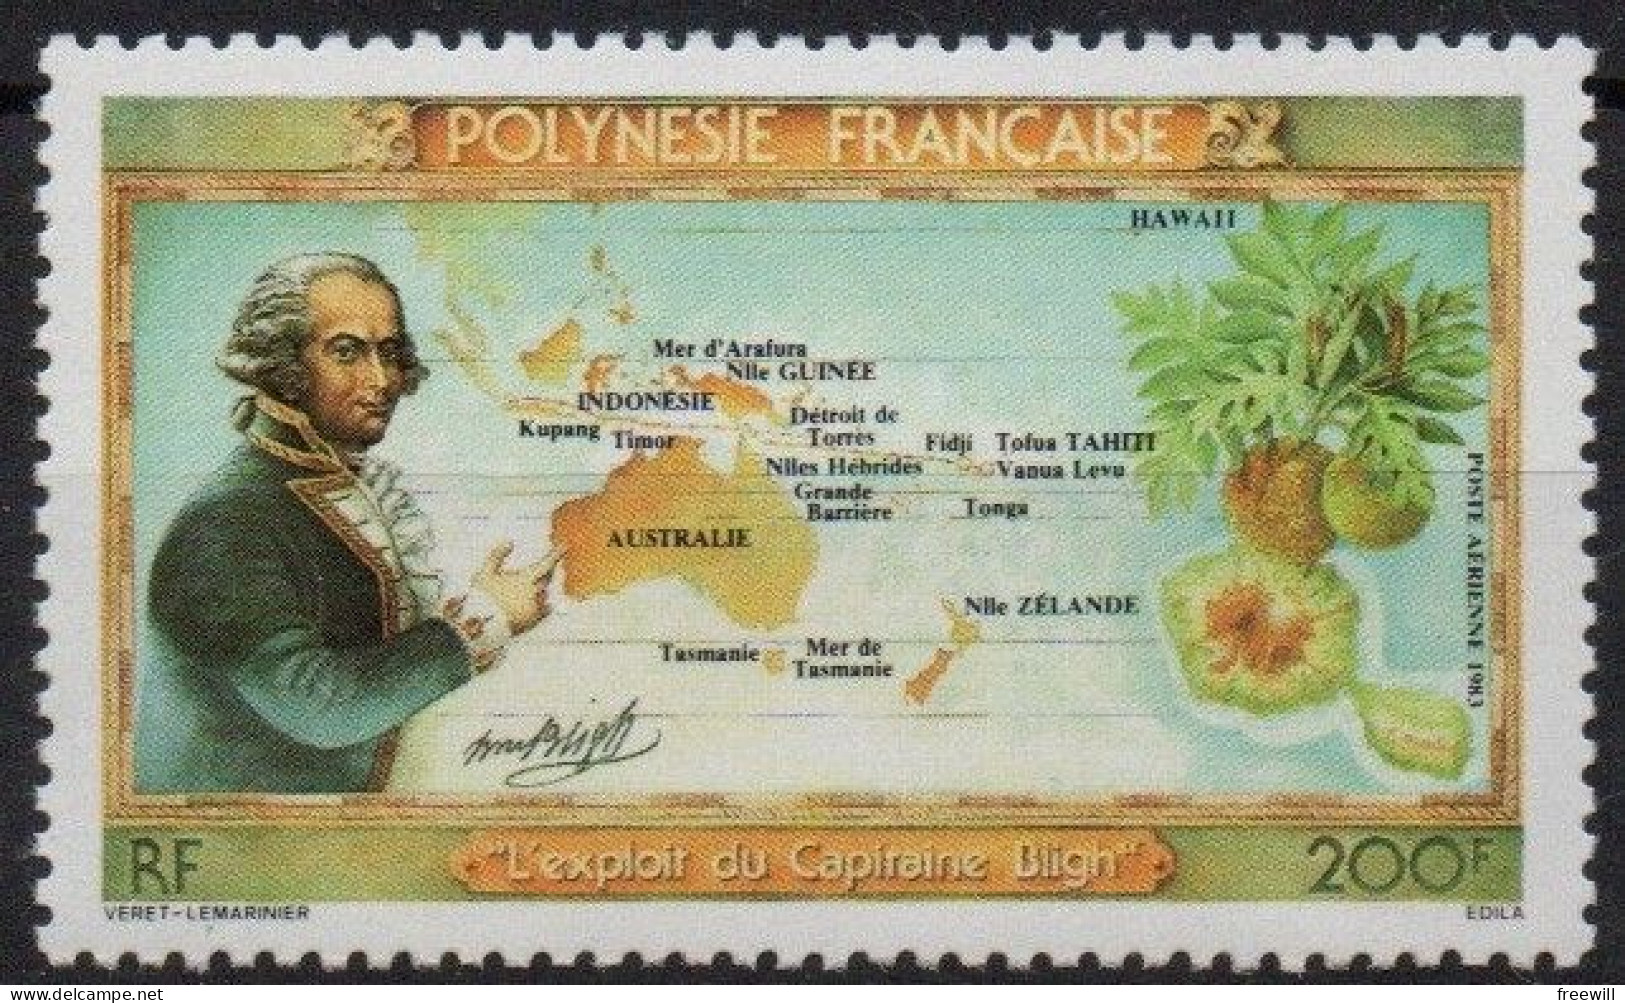 Polynésie française   Timbres divers - Various stamps -Verschillende postzegels XXX